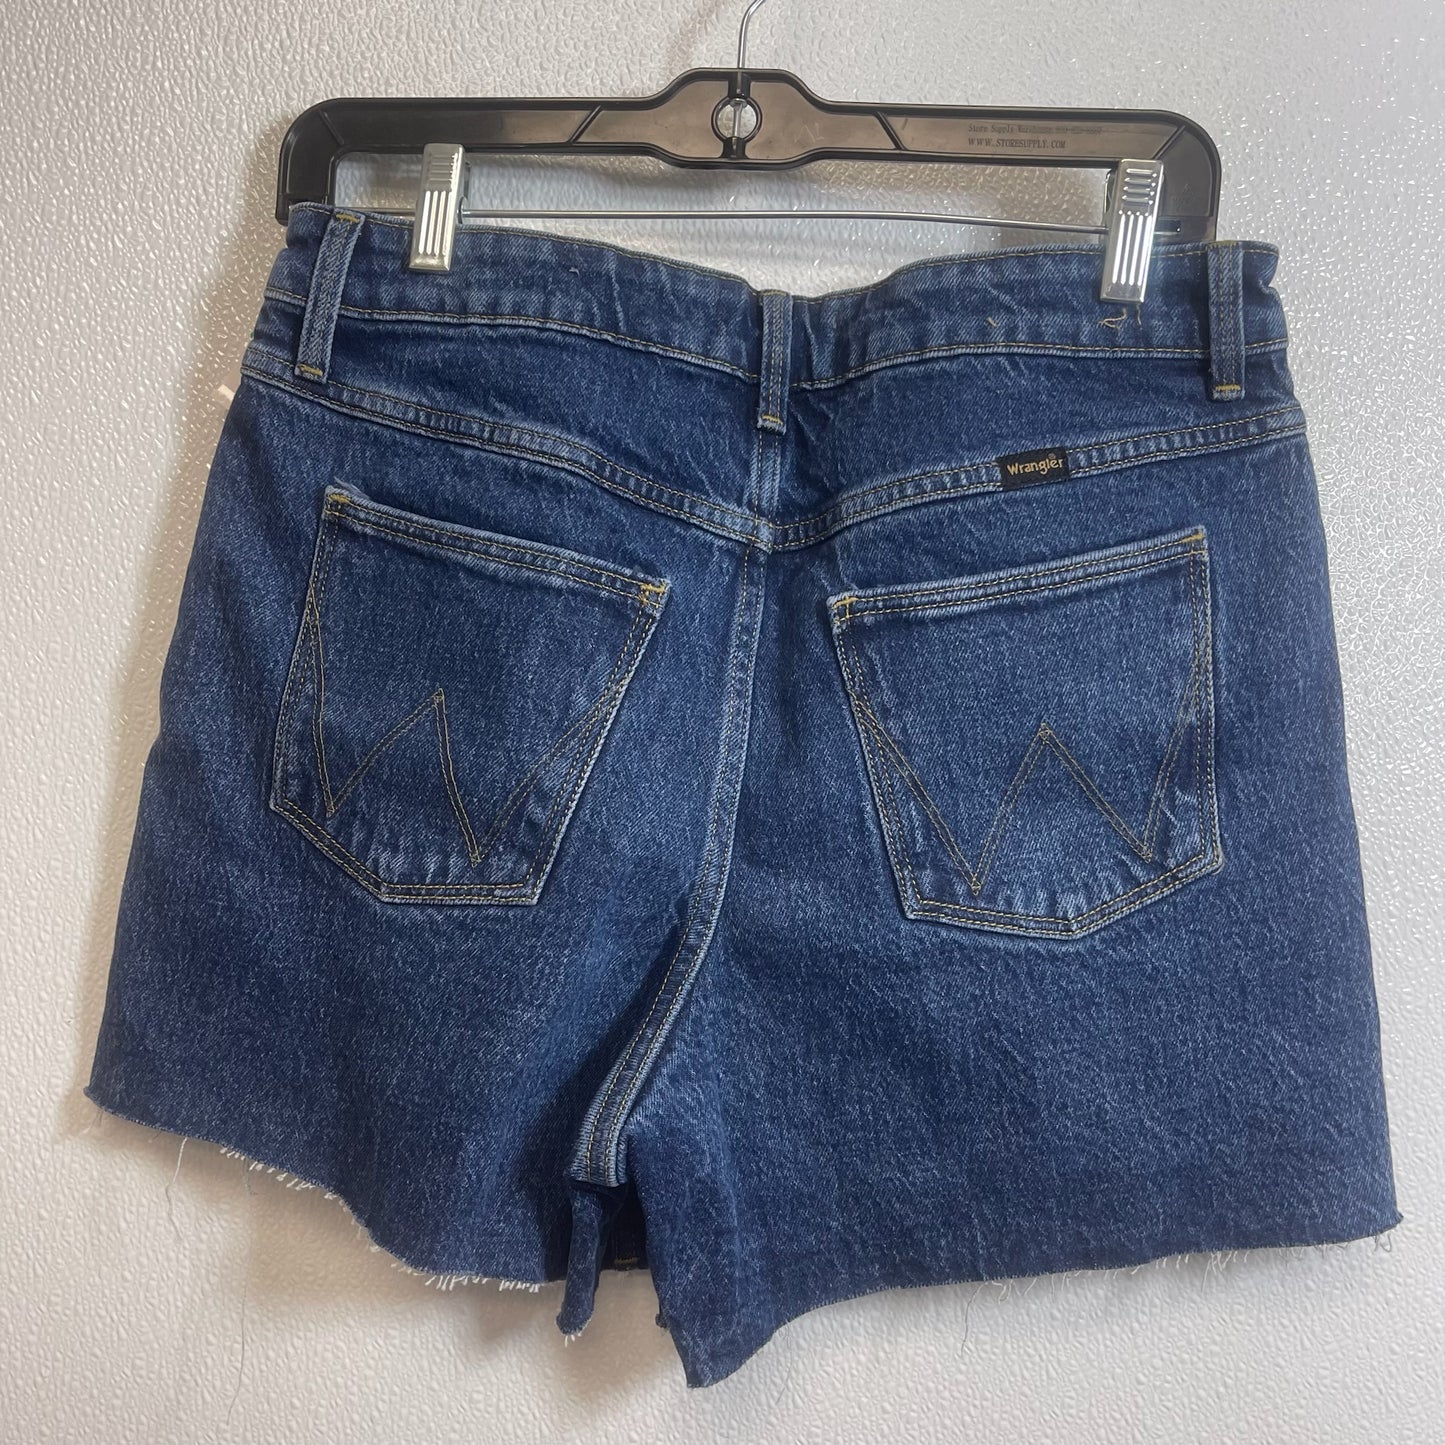 Shorts By Wrangler  Size: 4